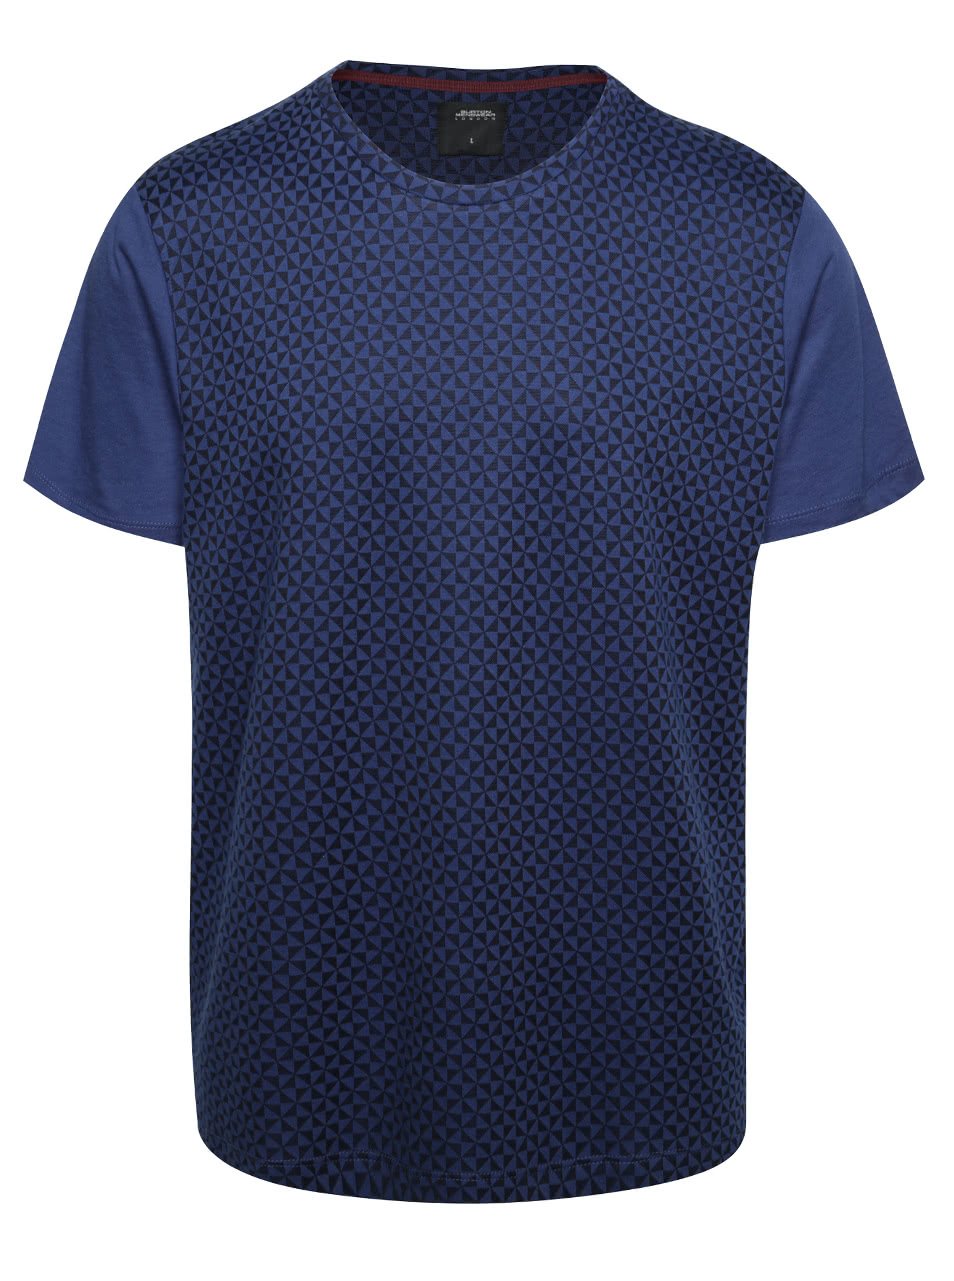 Tmavě modré triko s geometrickým vzorem Burton Menswear London